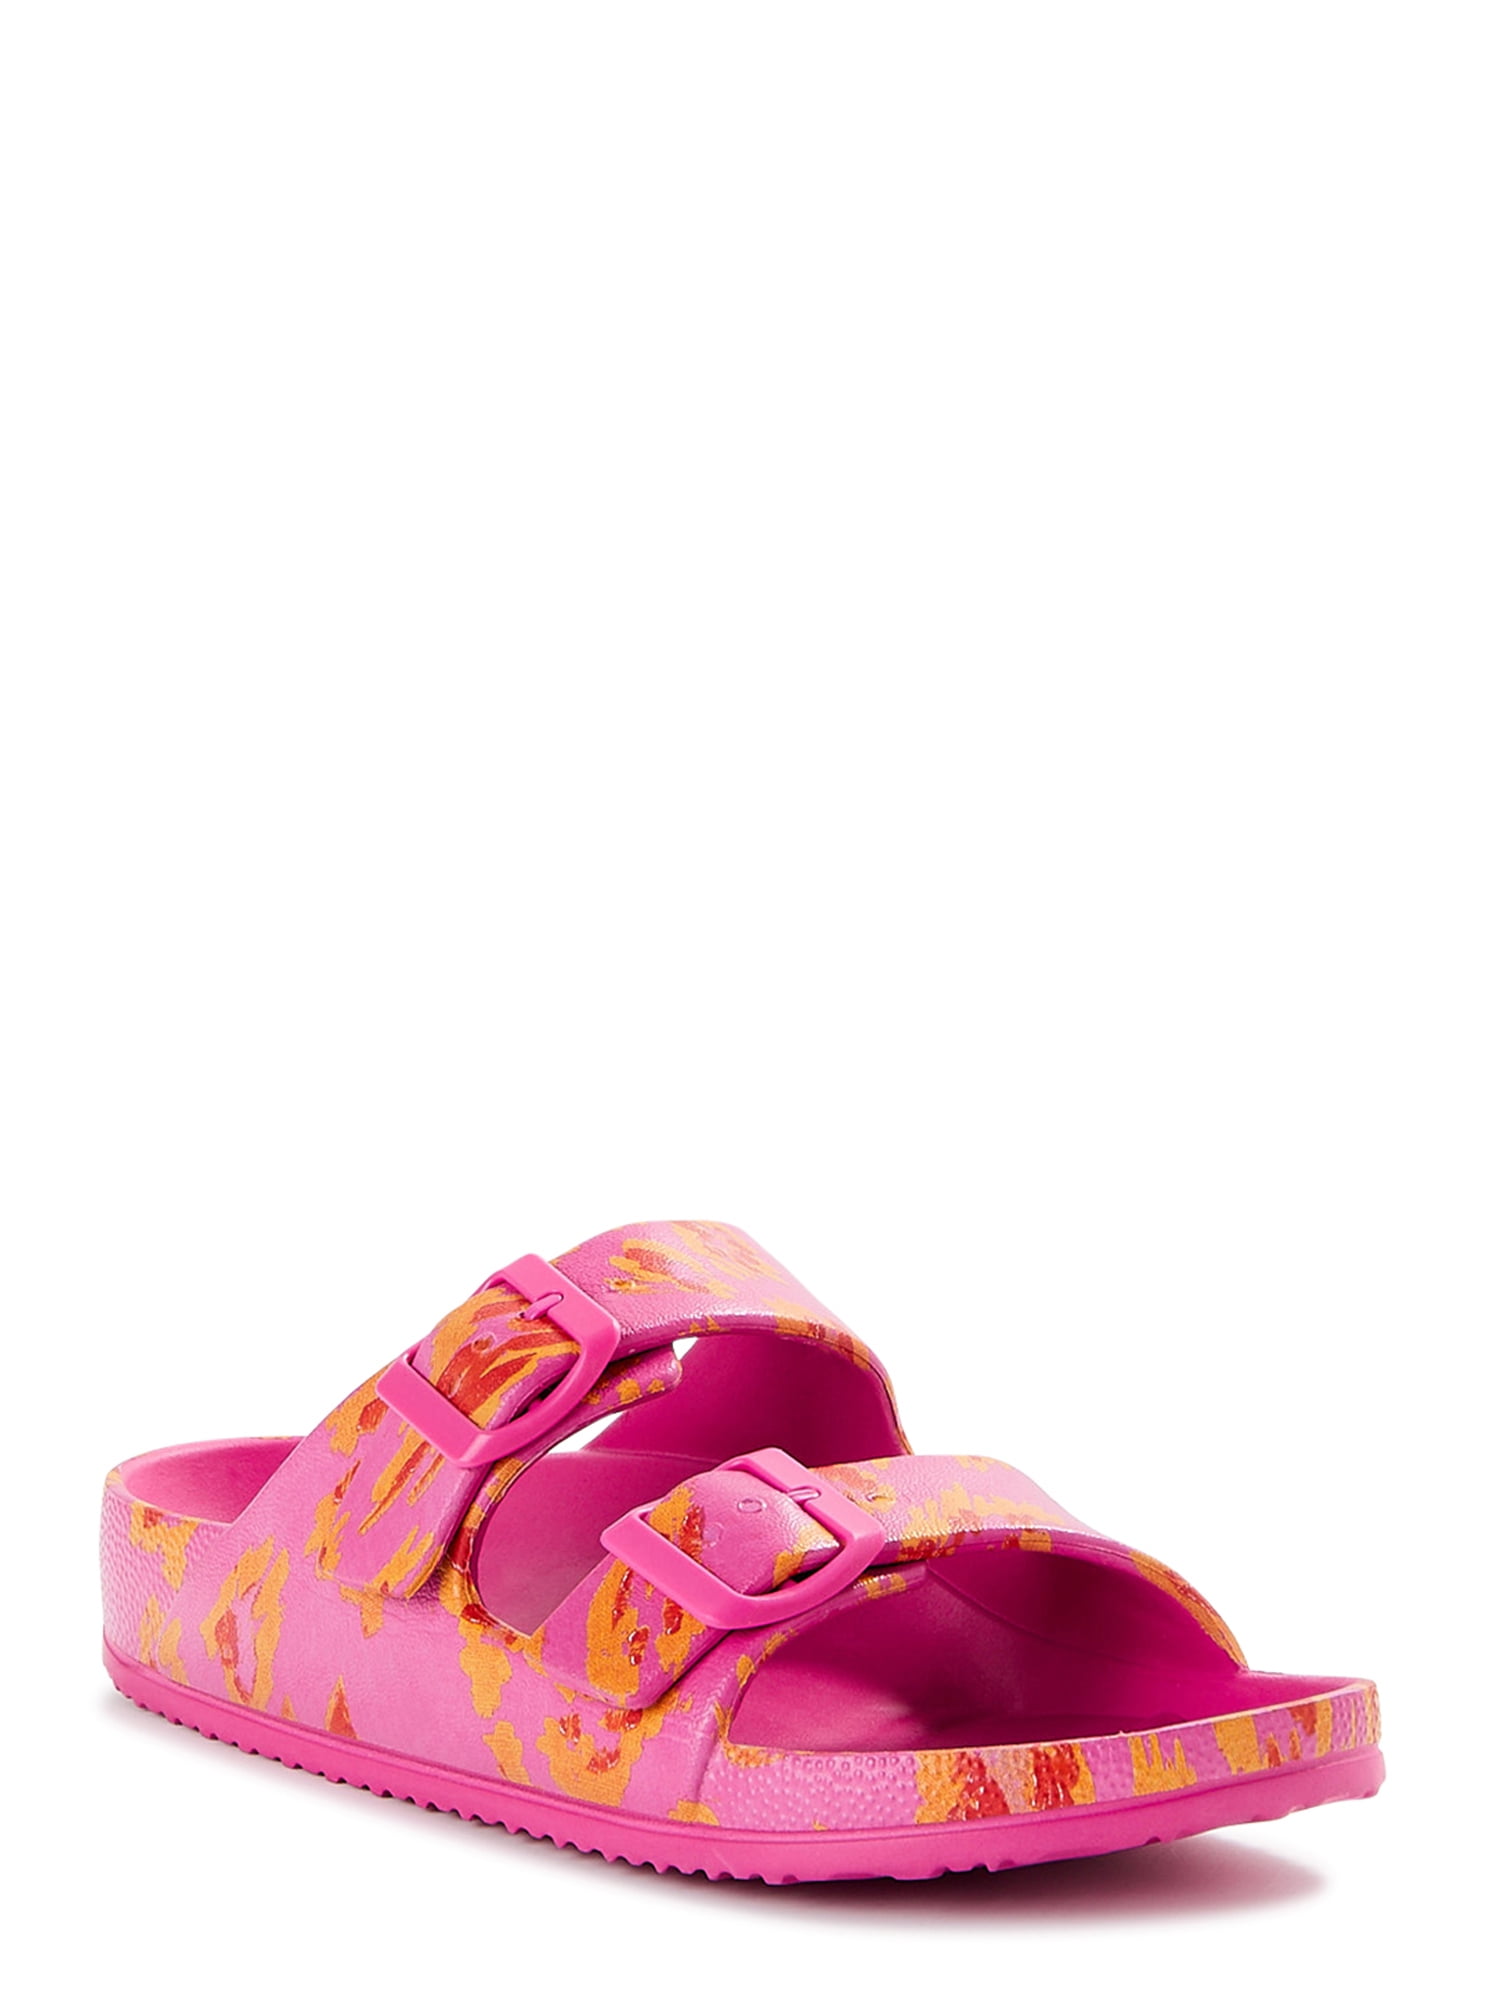 Scoop Women's Slide Sandals with Printed Footbed - Walmart.com